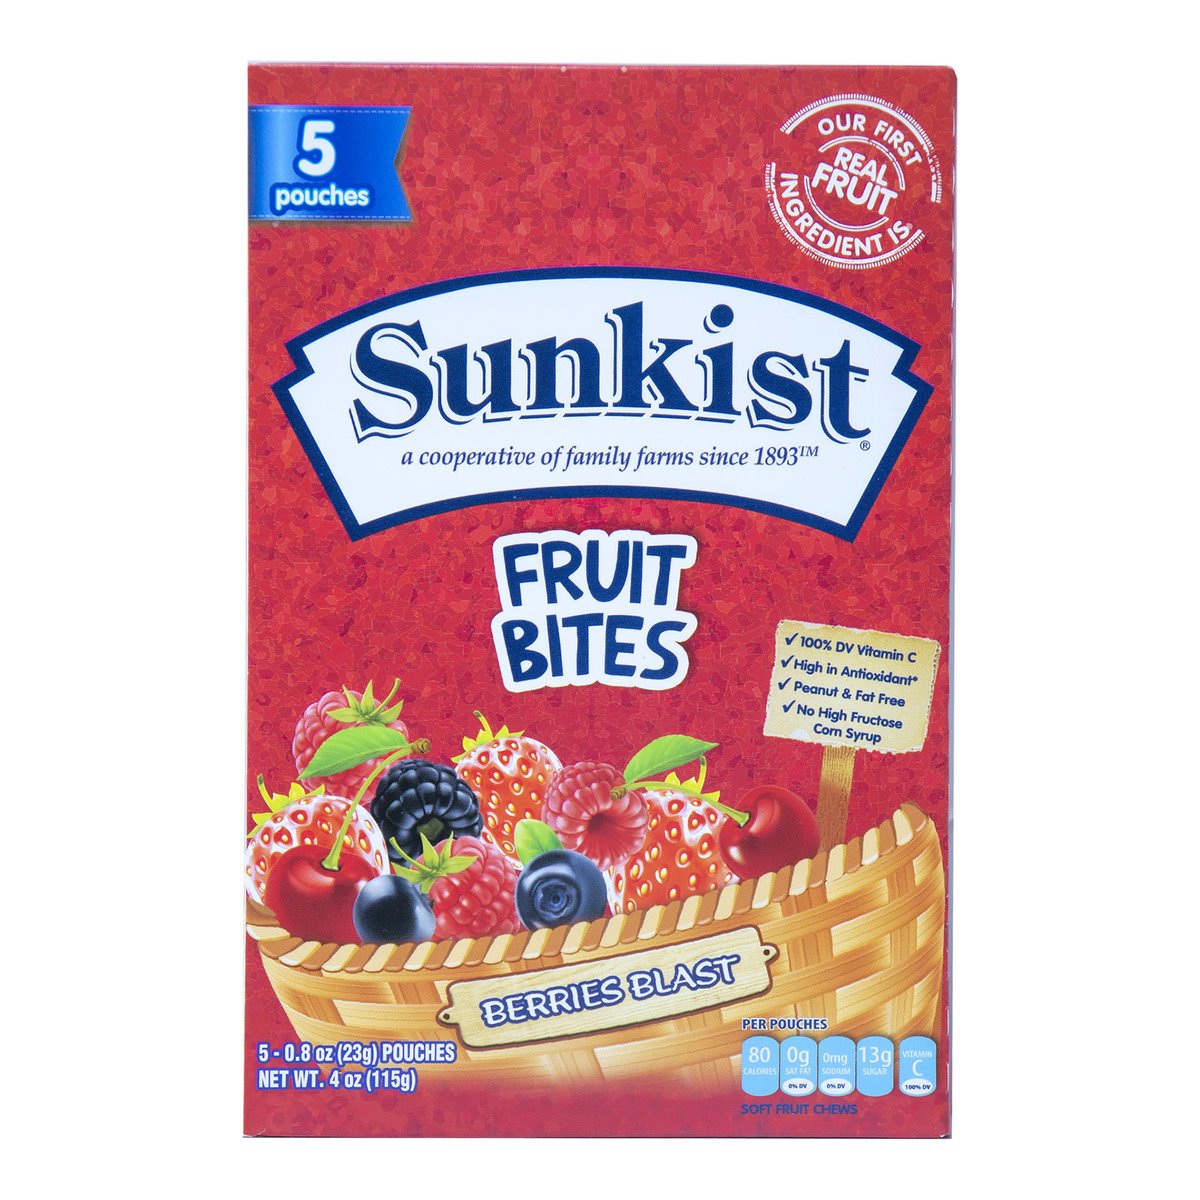 Sunkist Berries Blast Fruit Bites 115 g